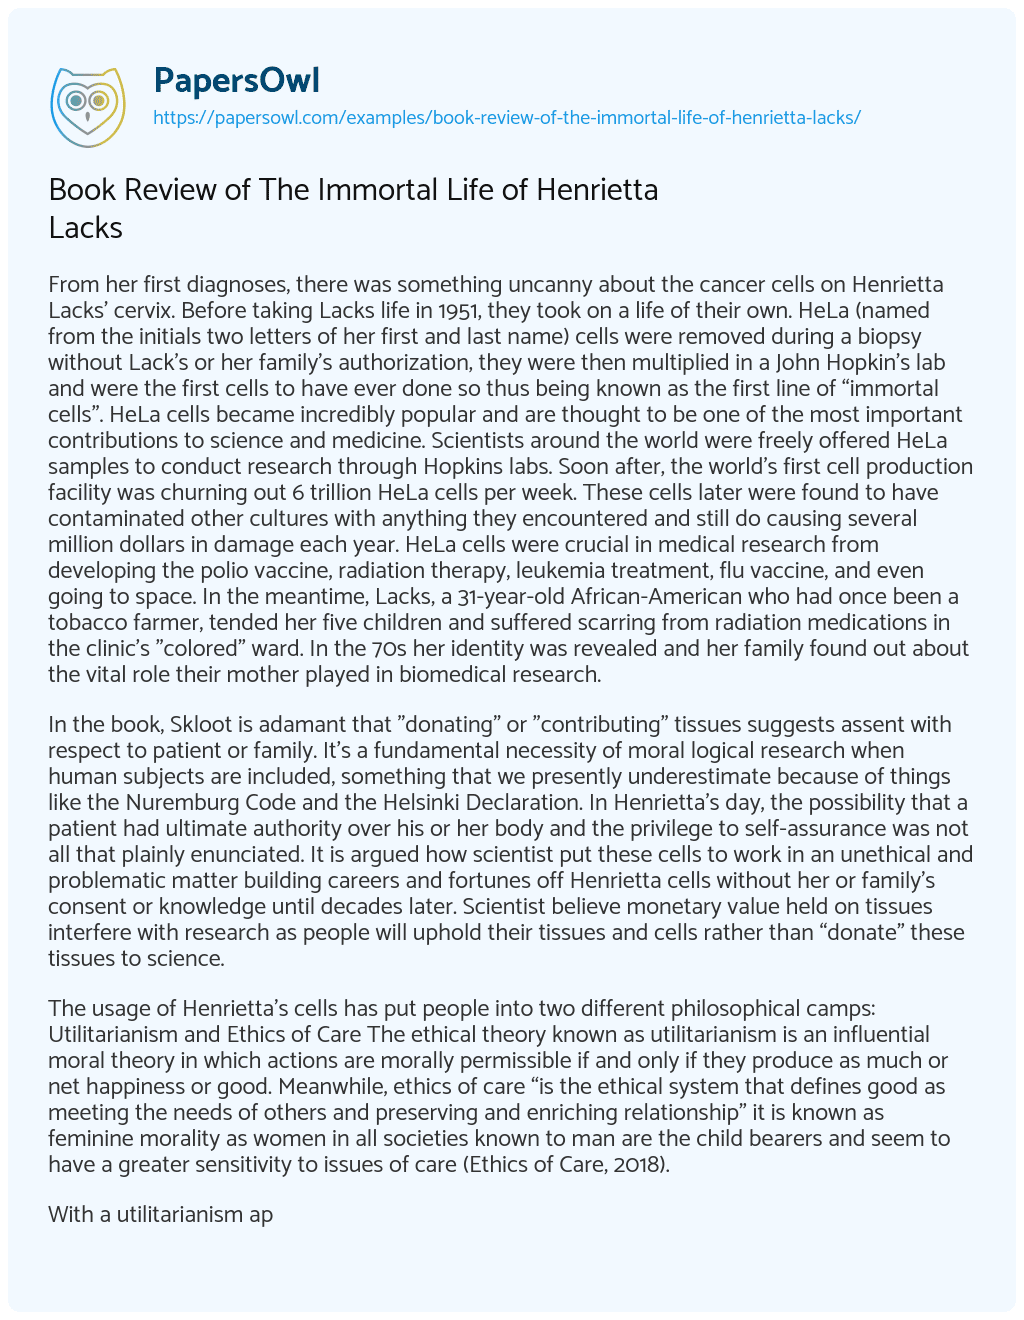 Book Review of the Immortal Life of Henrietta Lacks essay